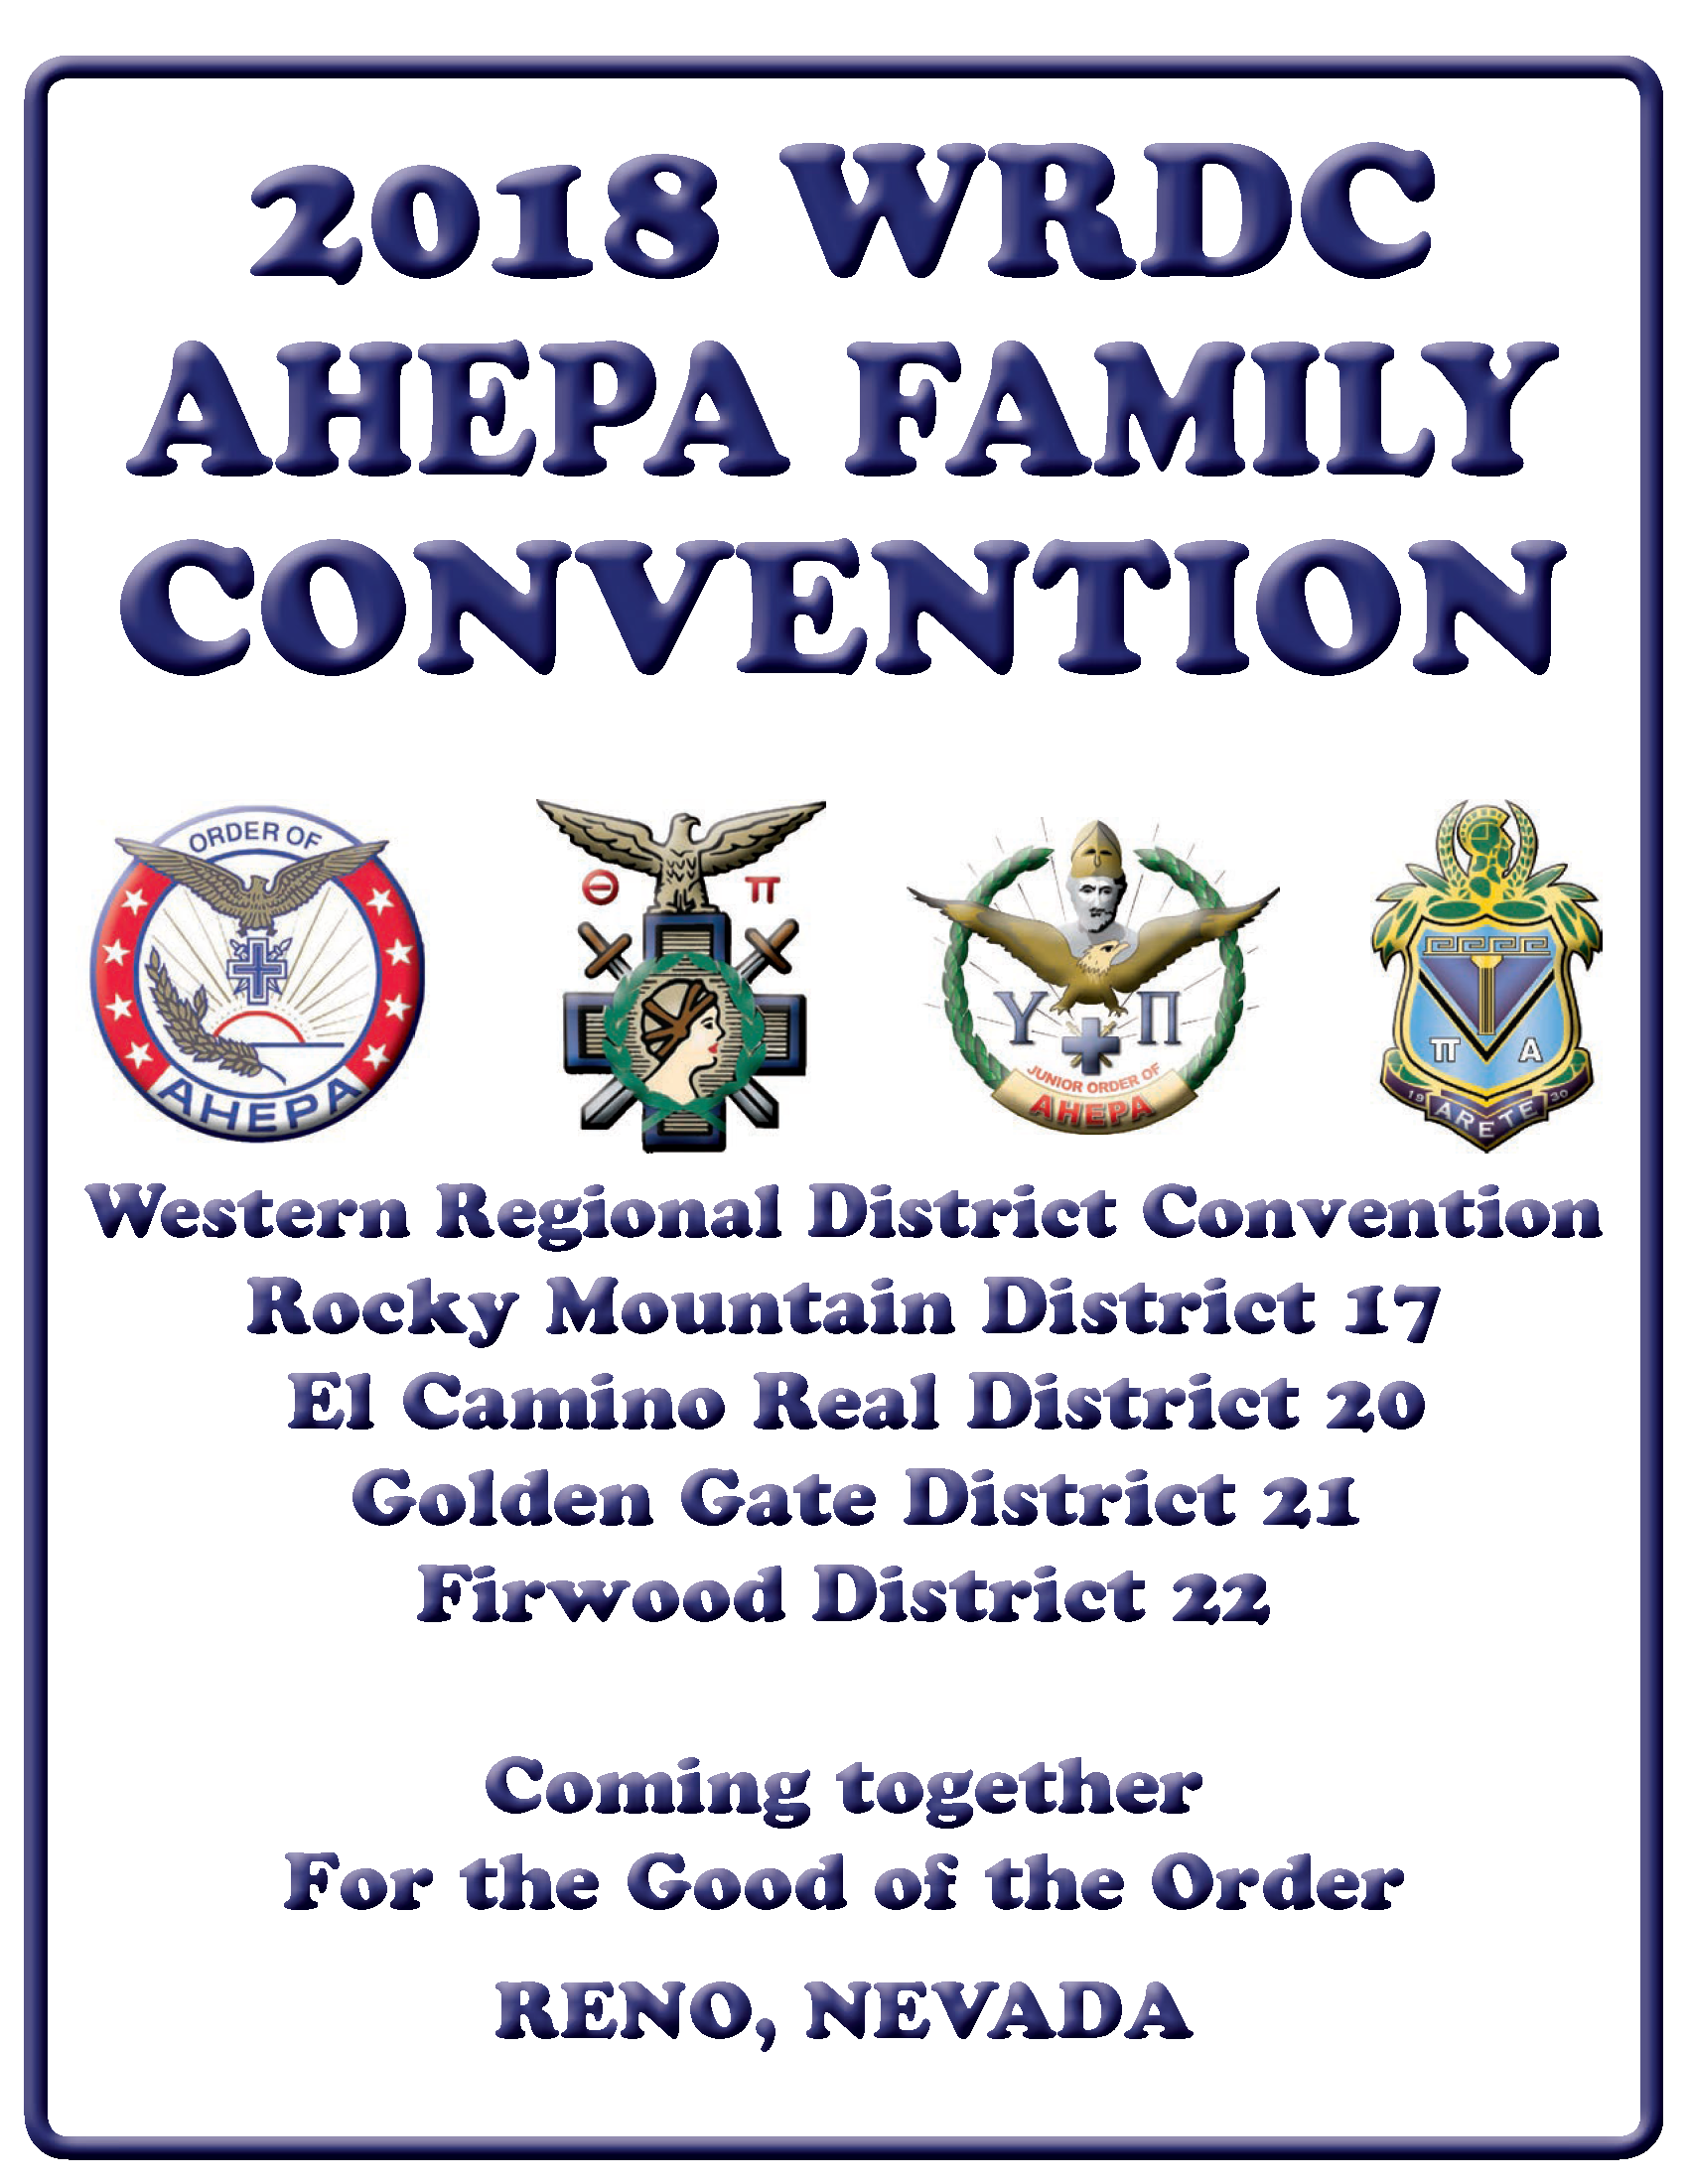 Western Regional District Convention